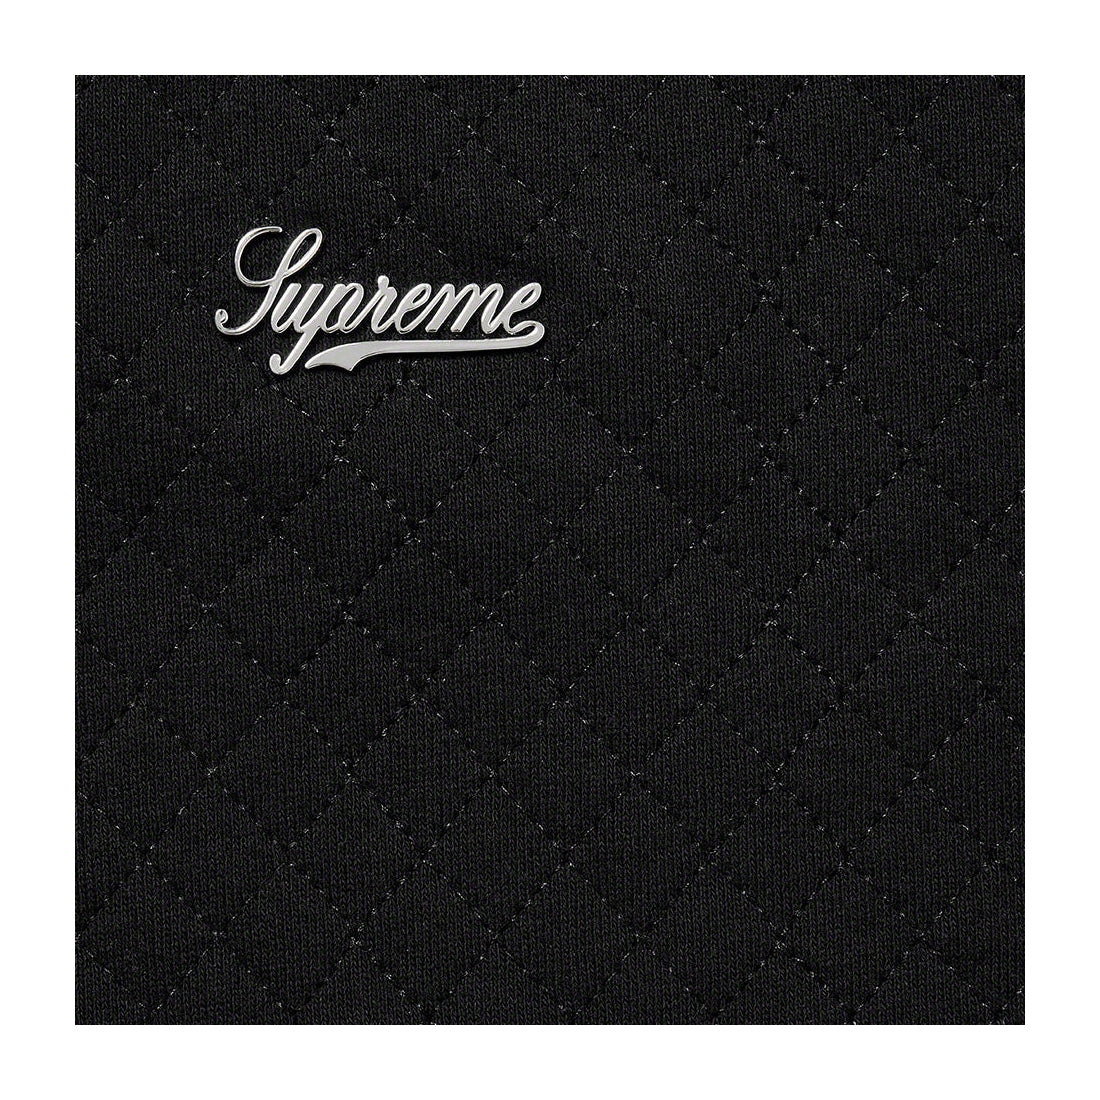 Supreme Micro Quilted Hooded Sweatshirt (Black)